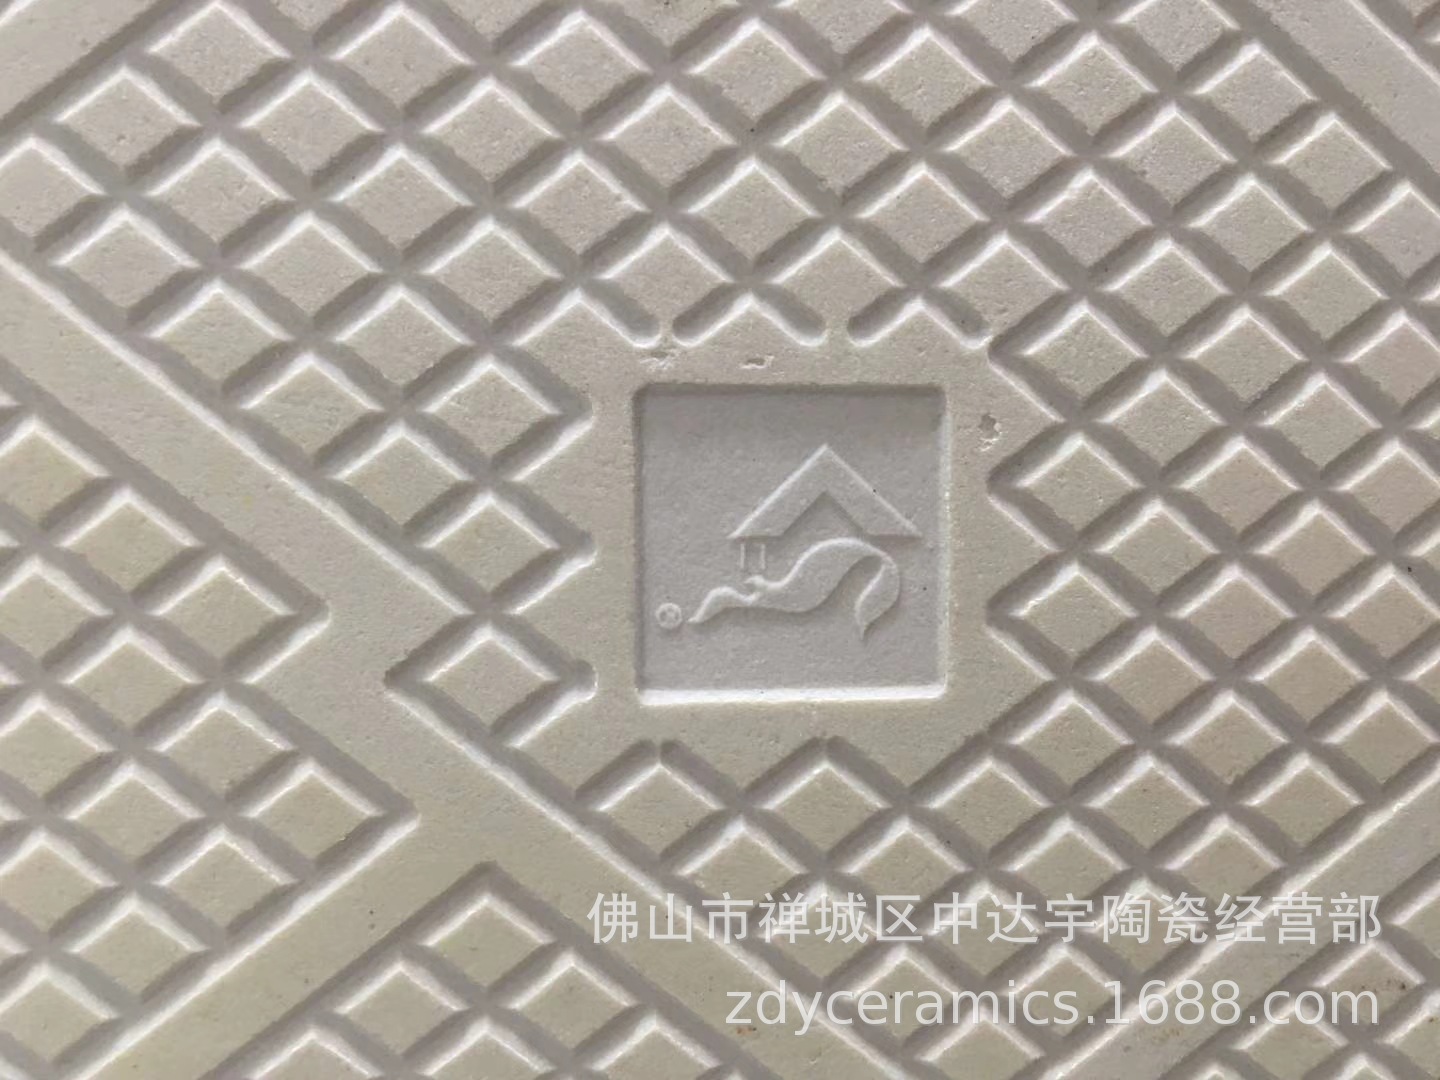 s大牌800x800MM索菲特金防滑防潮负离子瓷抛砖客厅厨房浴室地面砖示例图1